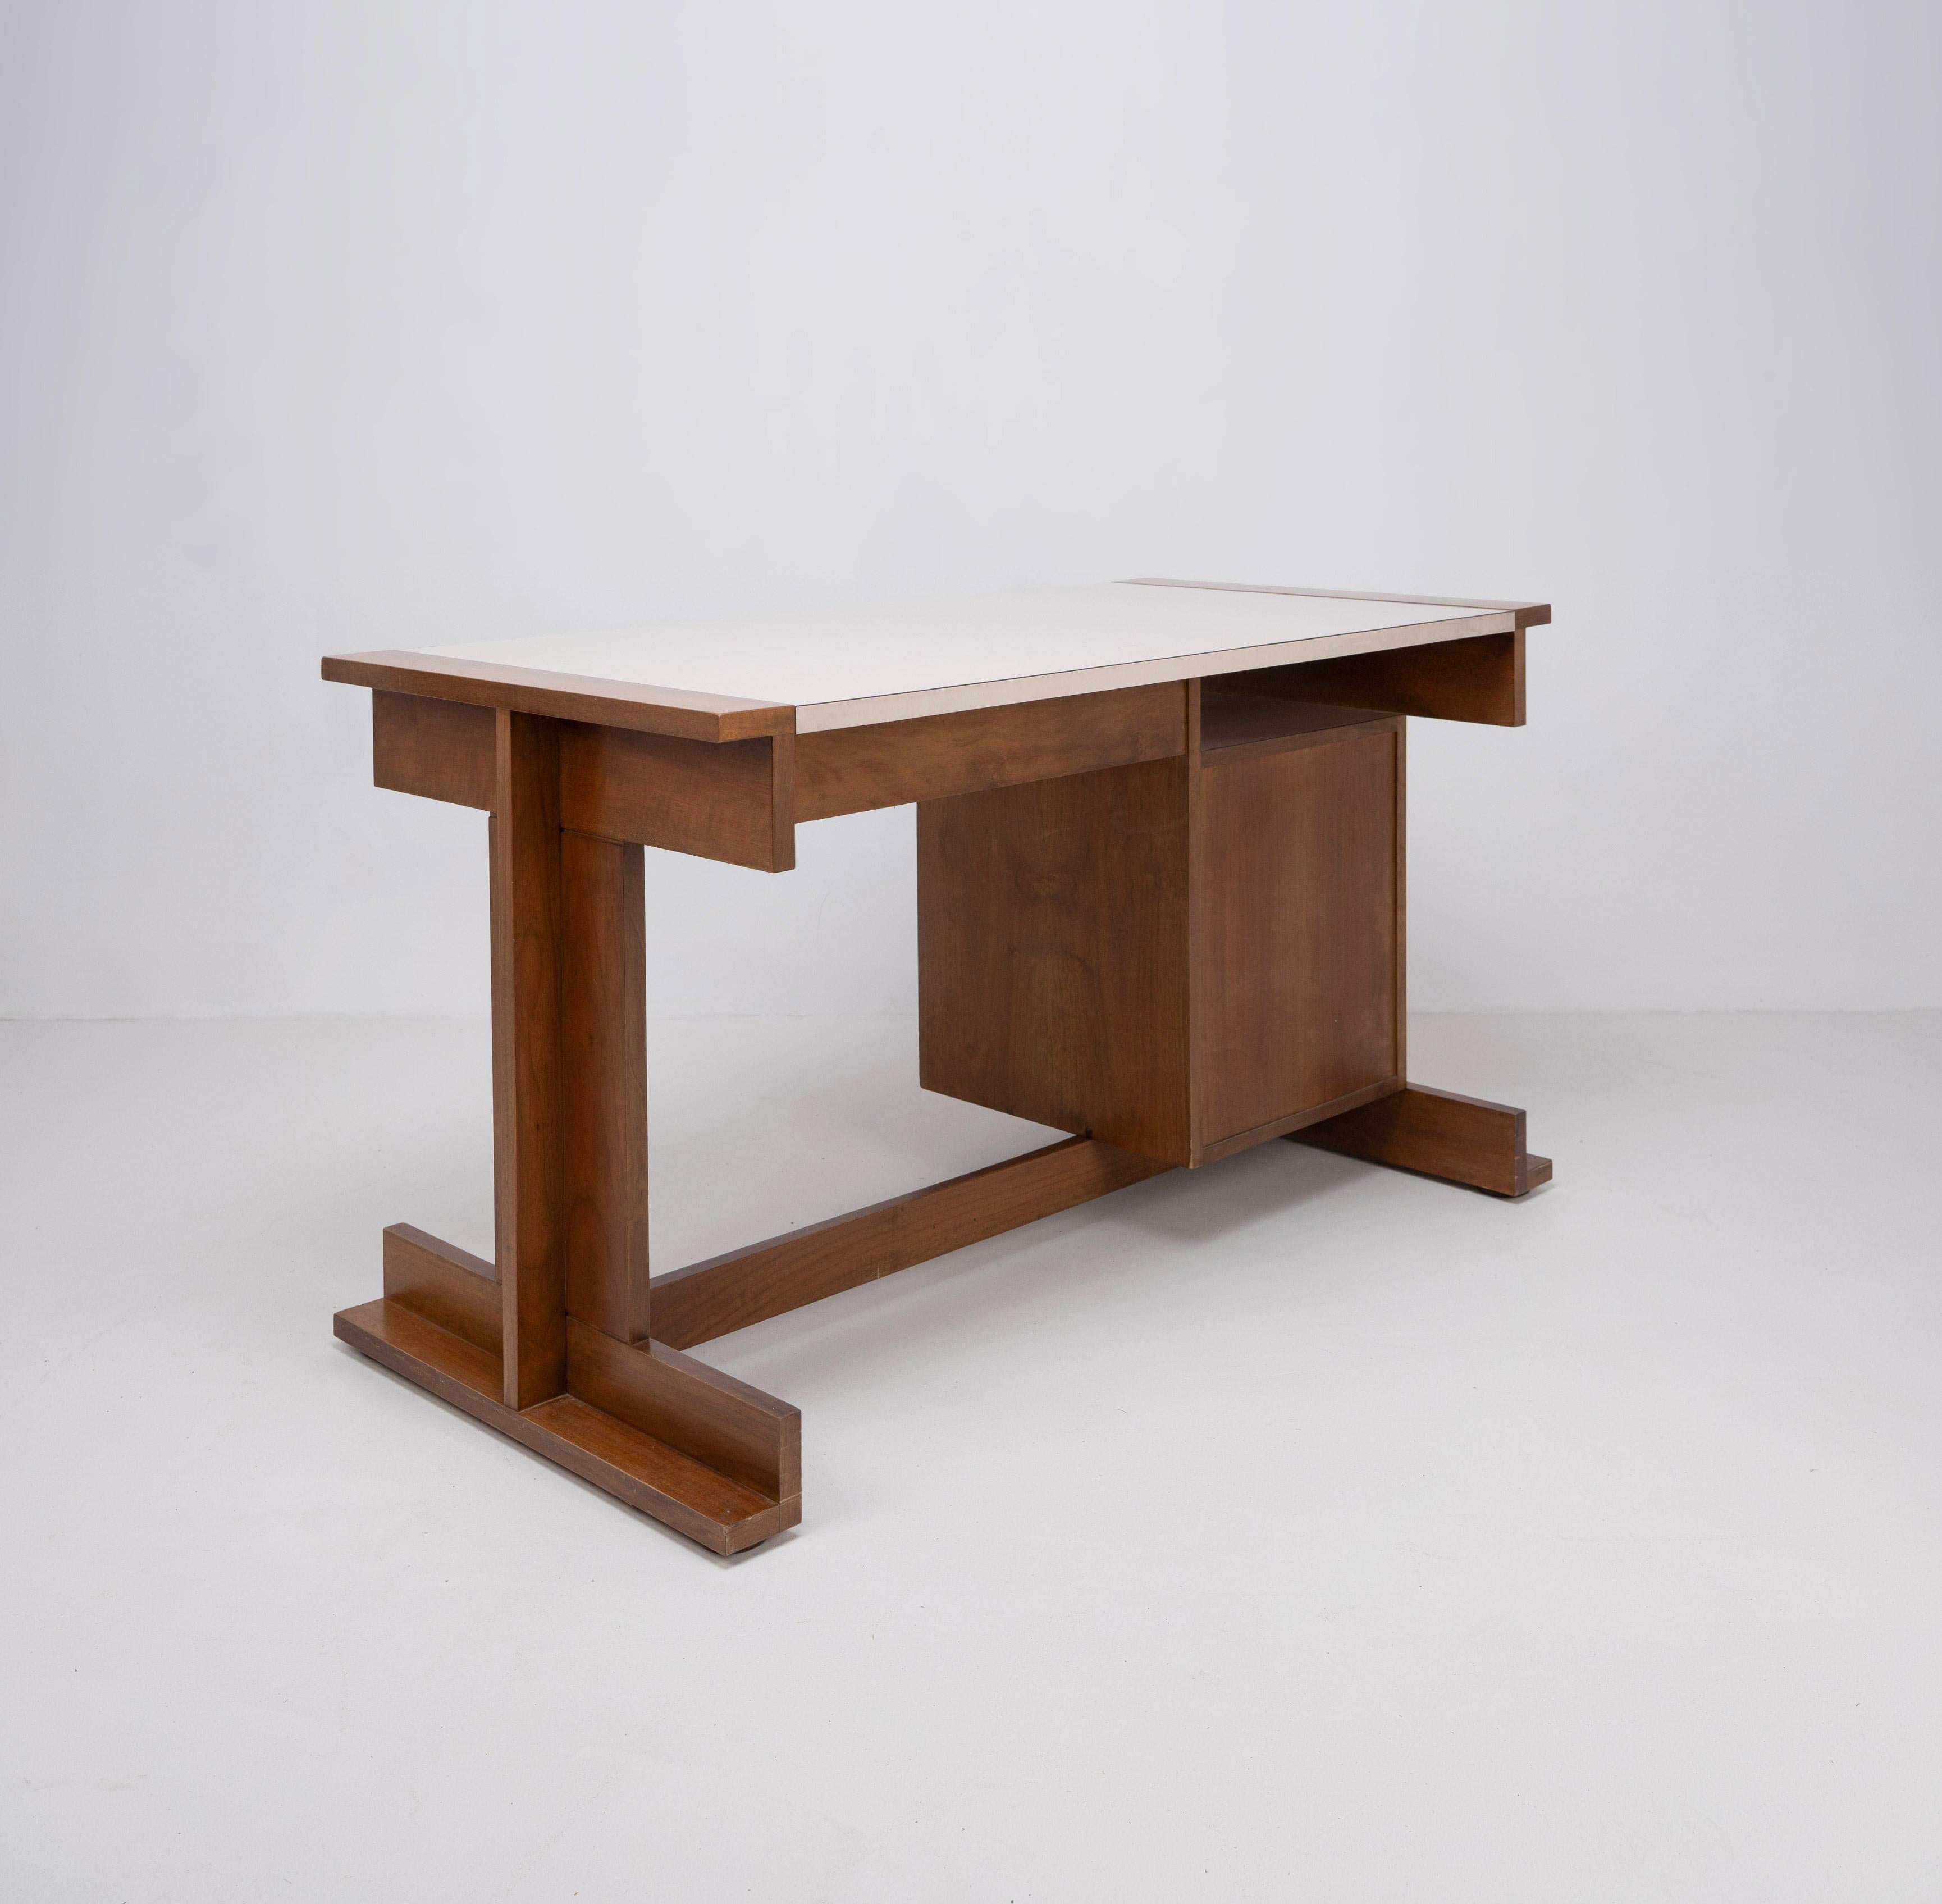 Italian Constructivist Wood and Melamine Desk, Italy, c.1950 For Sale